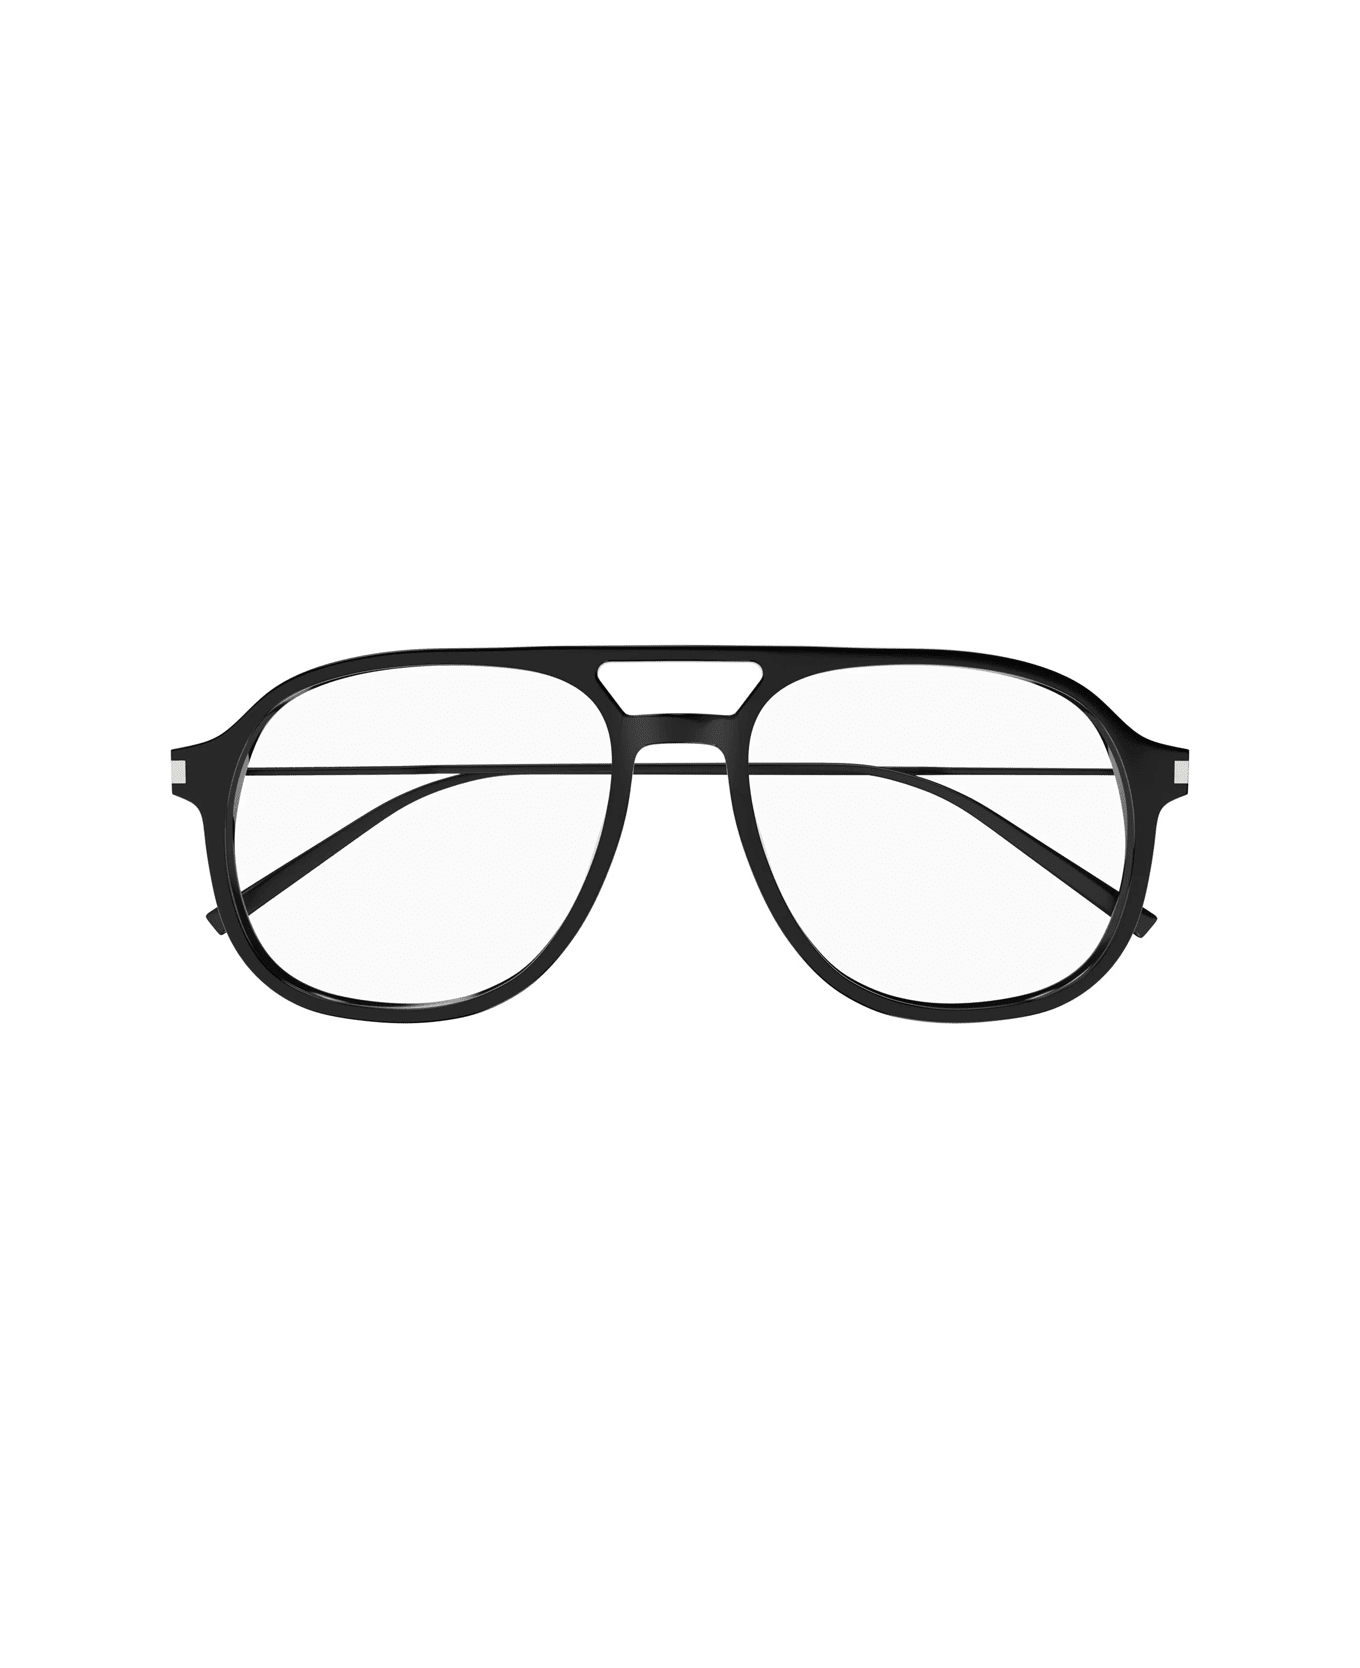 Saint Laurent Eyewear Sl 626 001 Glasses - Nero